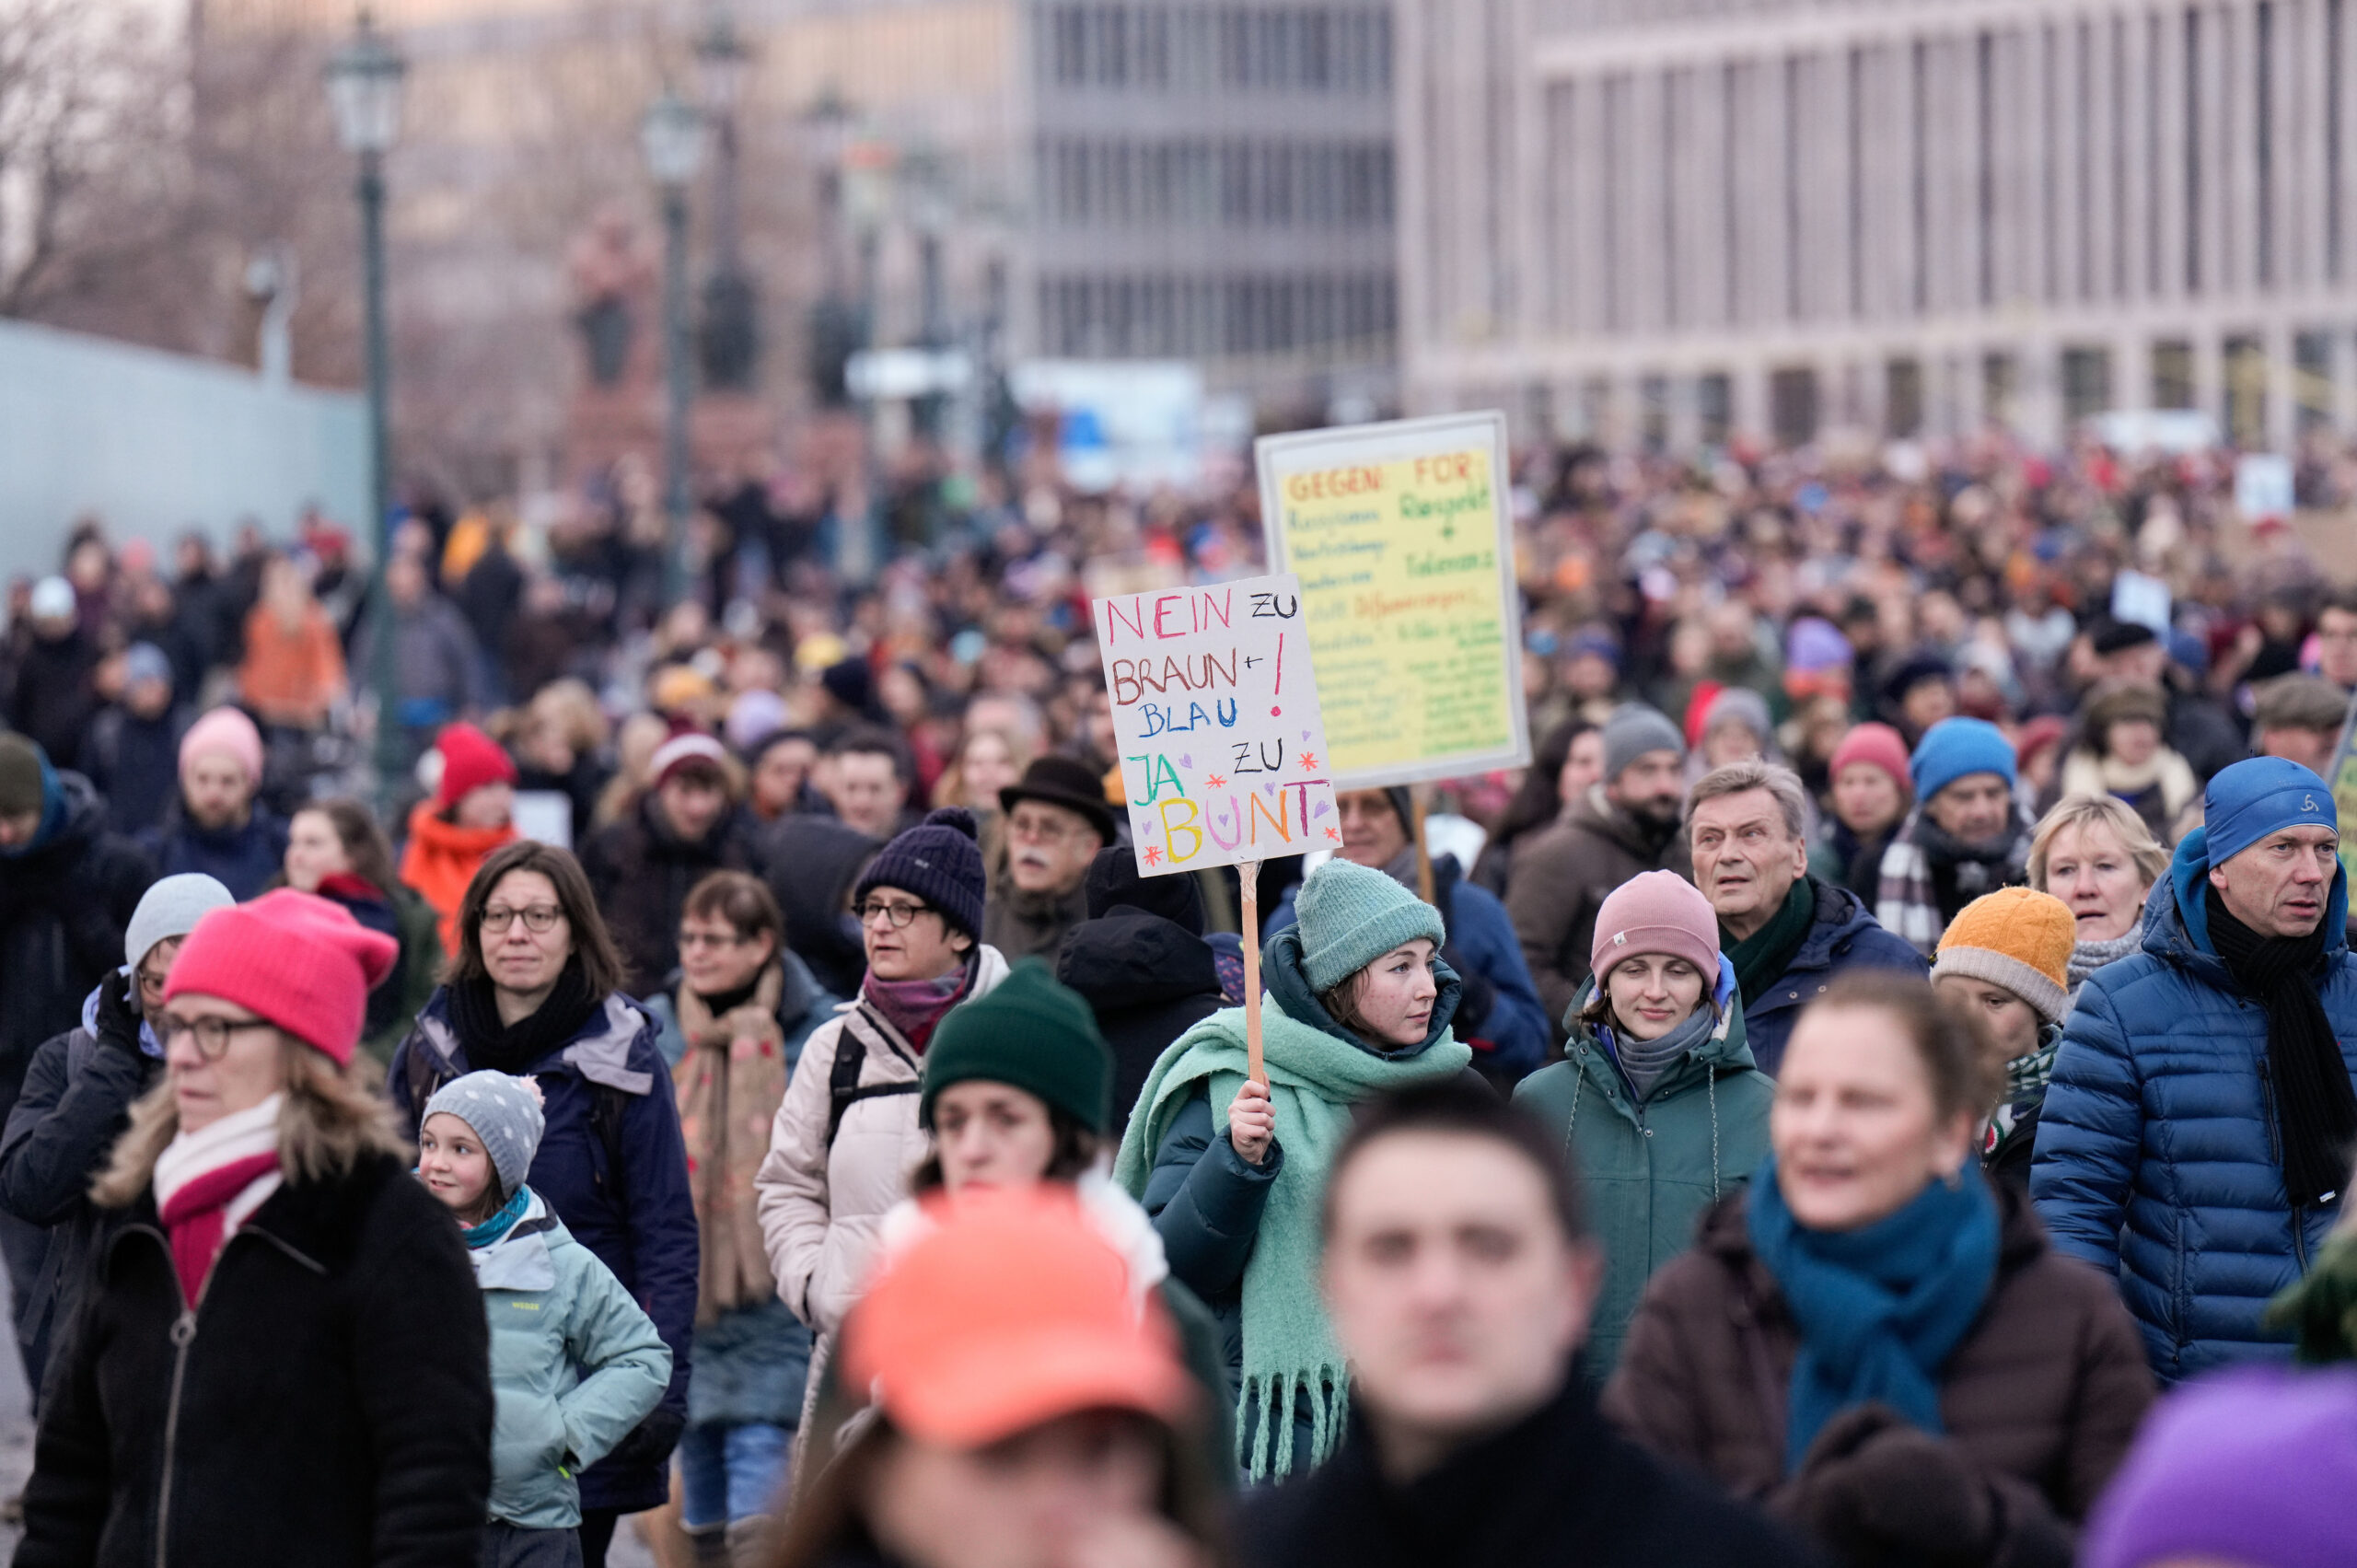 Bei der letzten Demo gegen Rechts in Berlin kamen bereits um die 100.000 Teilnehmer.